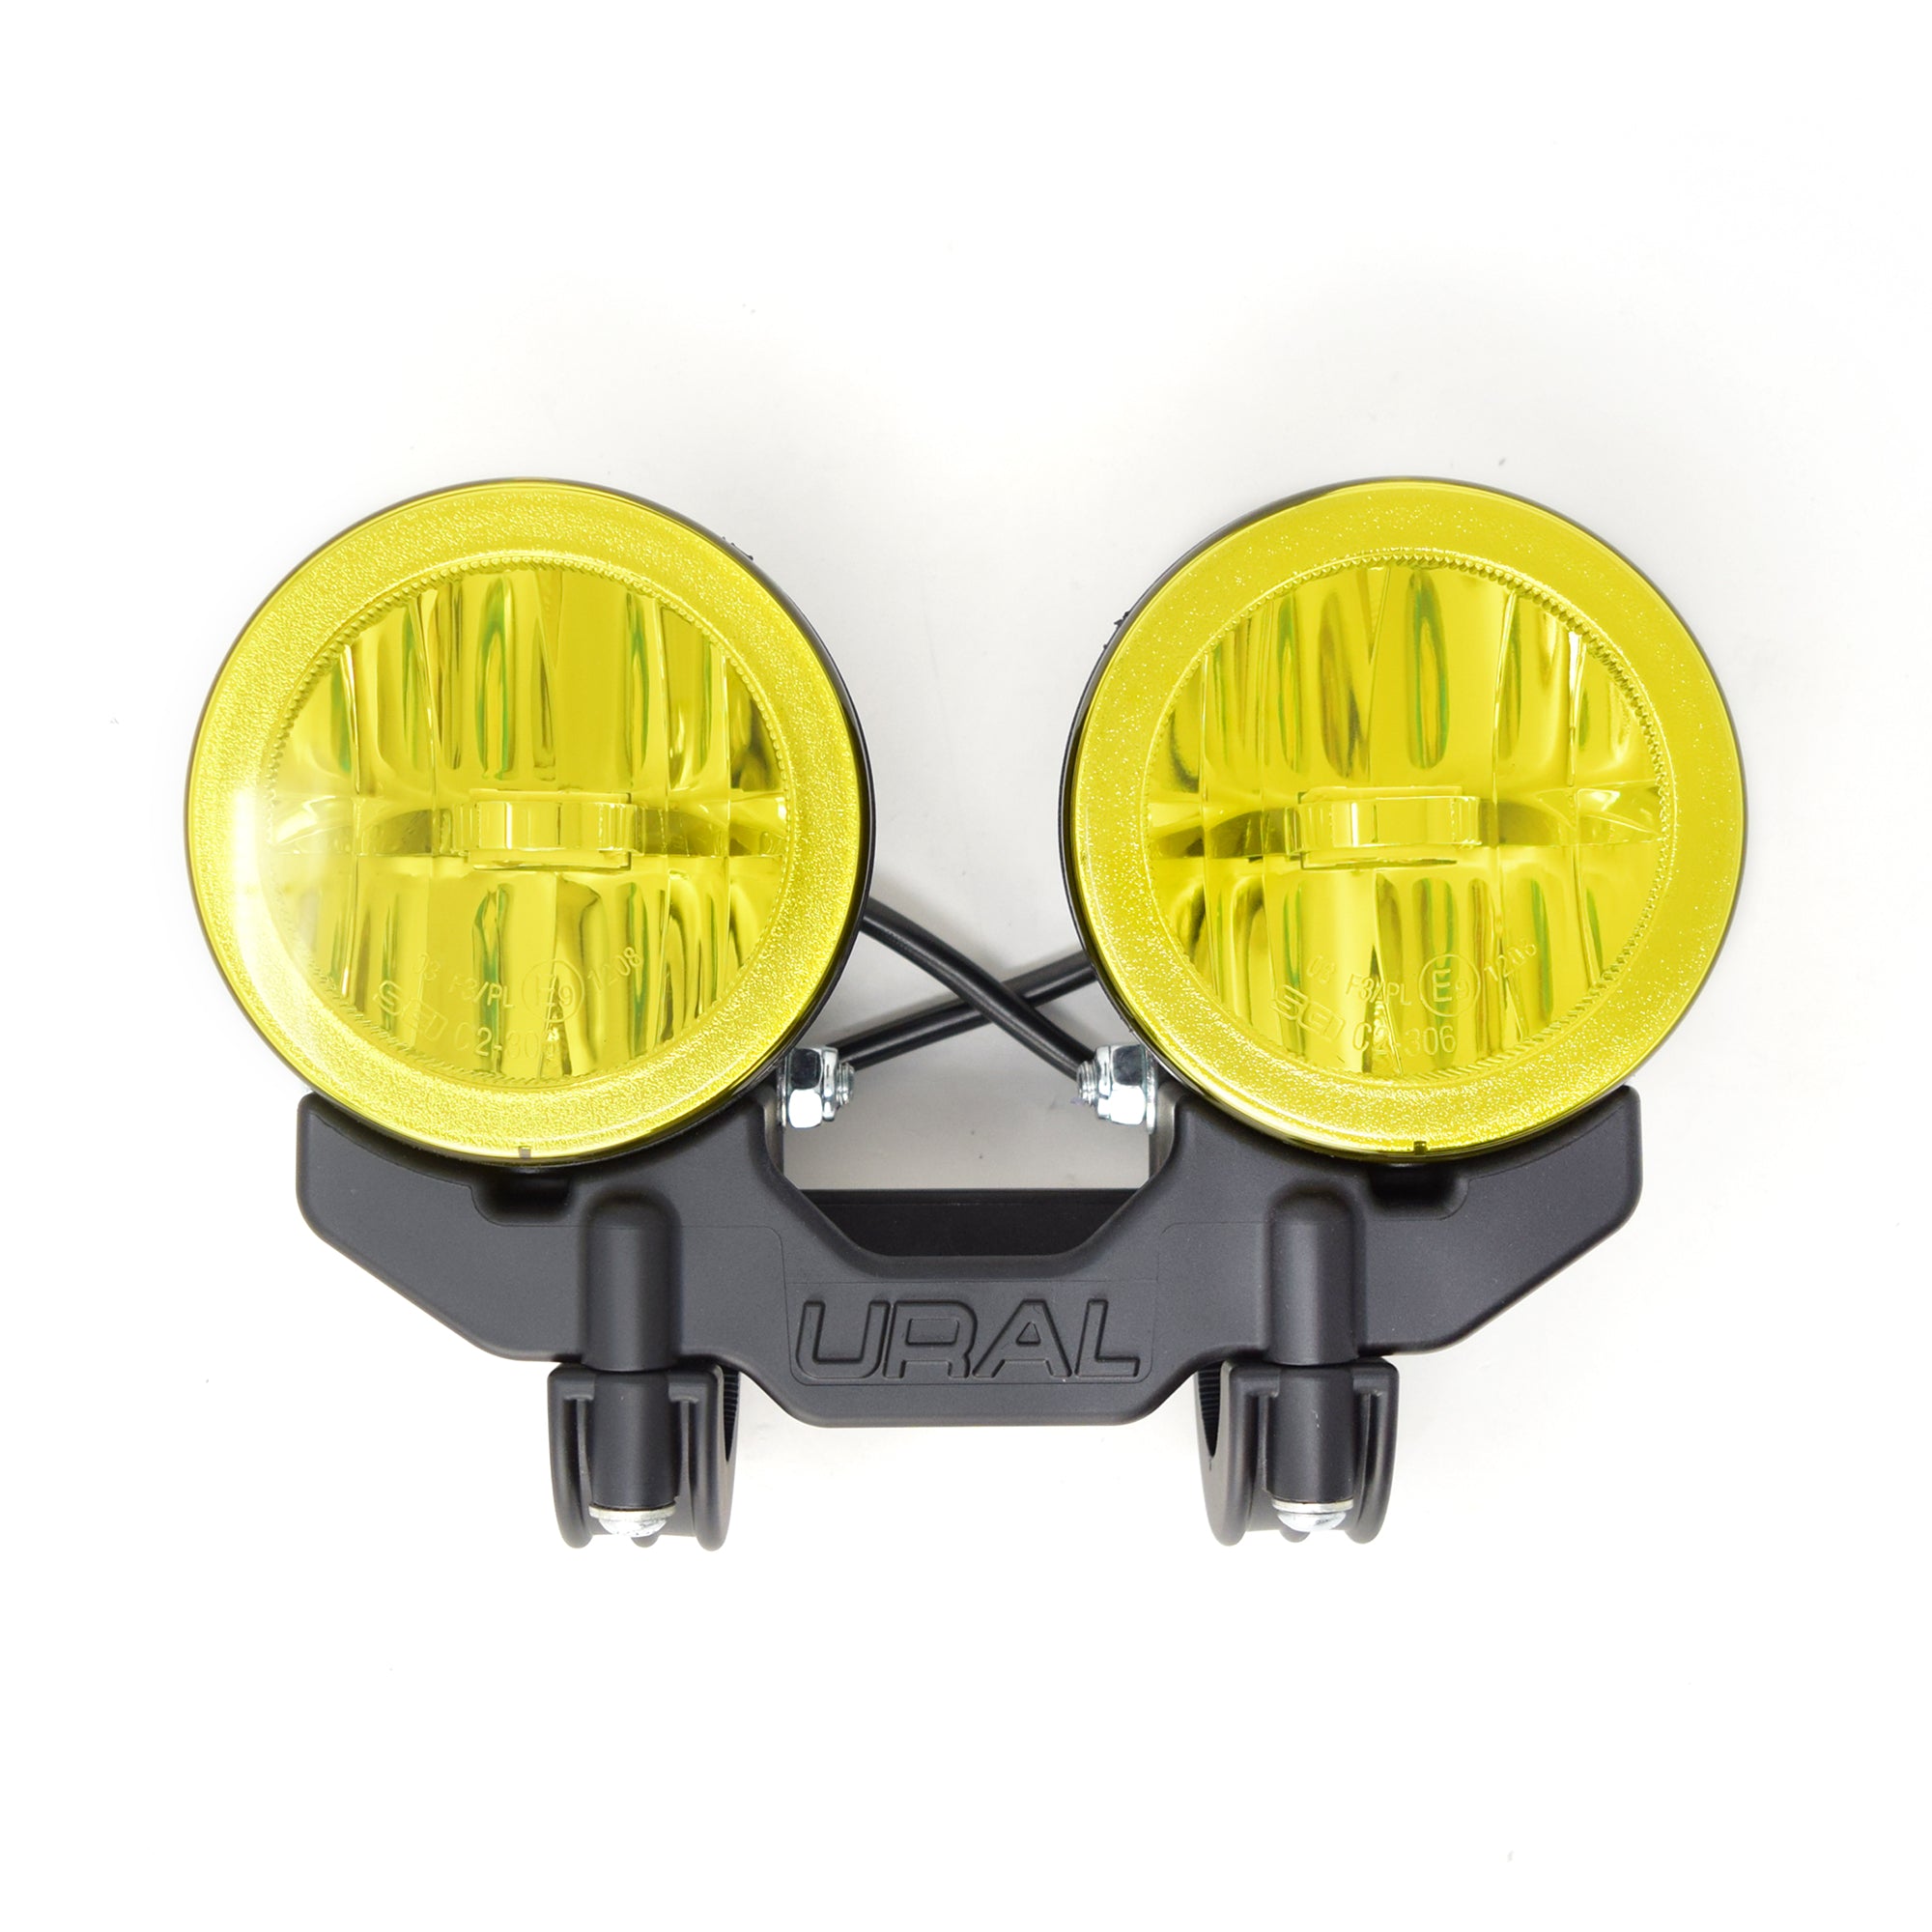 Yellow LED Dual Sidecar Light Kit